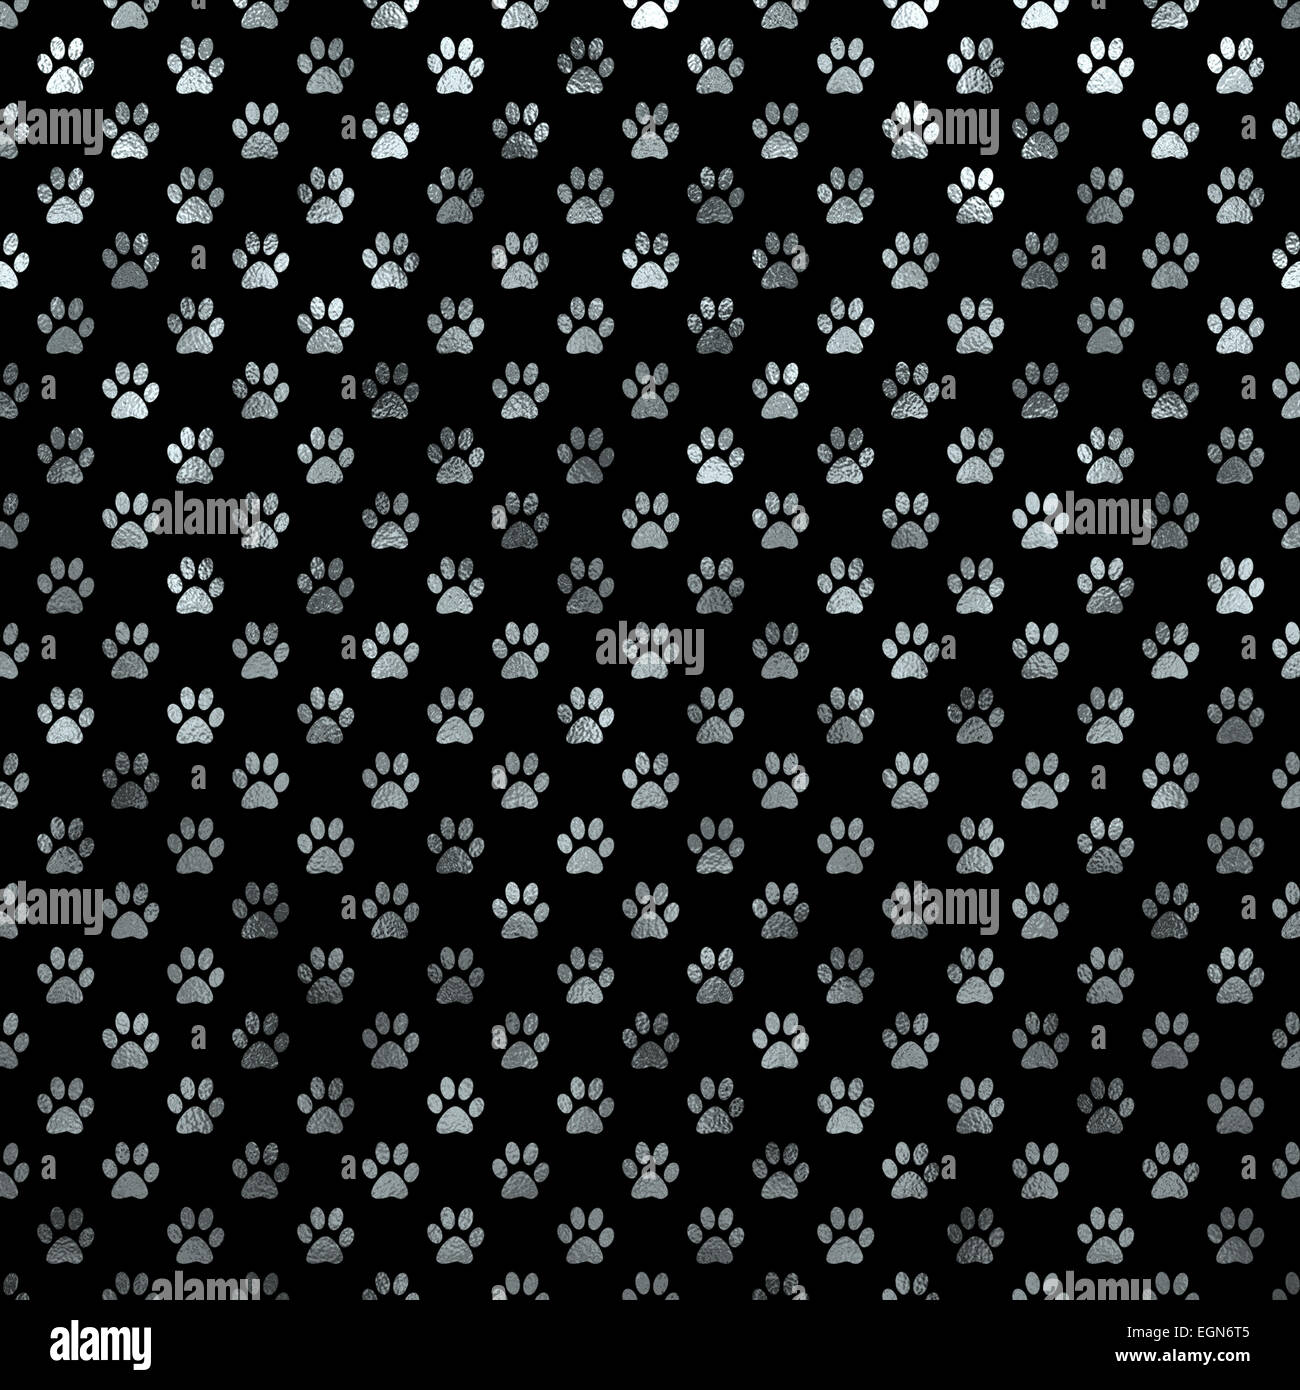 Silver and Black Dog Paws Metallic Foil Polka Dot Texture Background Pattern Stock Photo